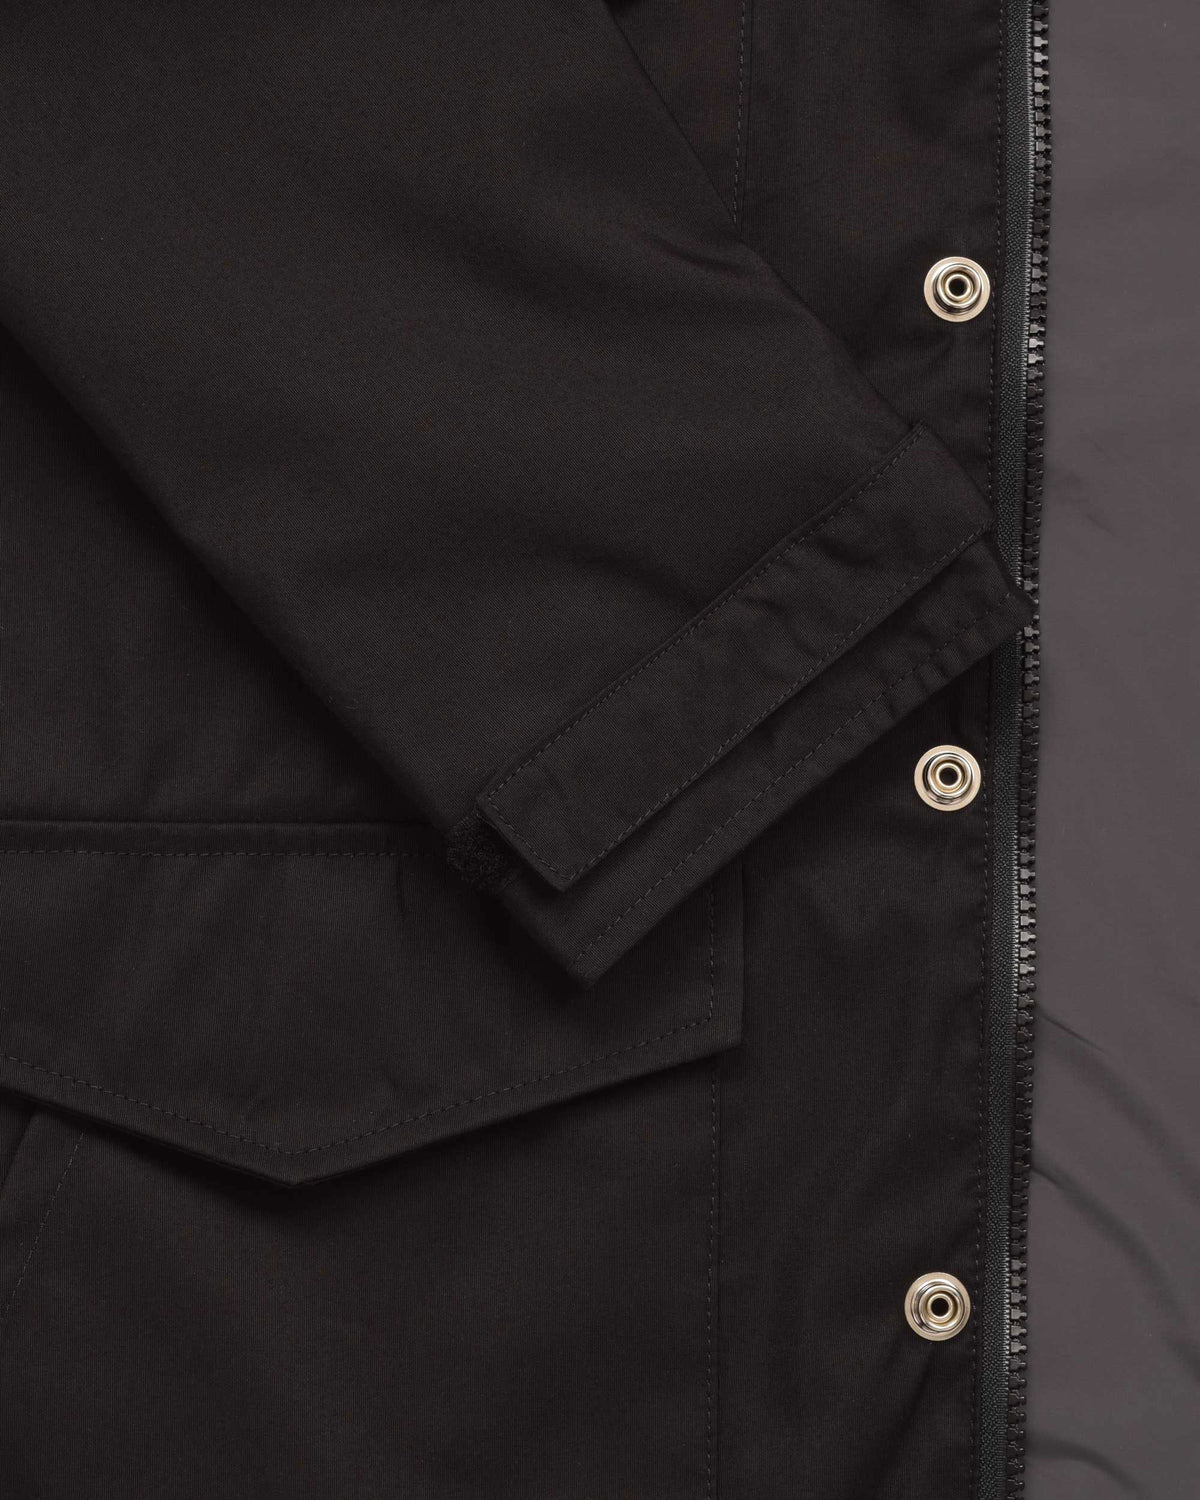 Michi Jacket Detail of Sleeve and Pocket